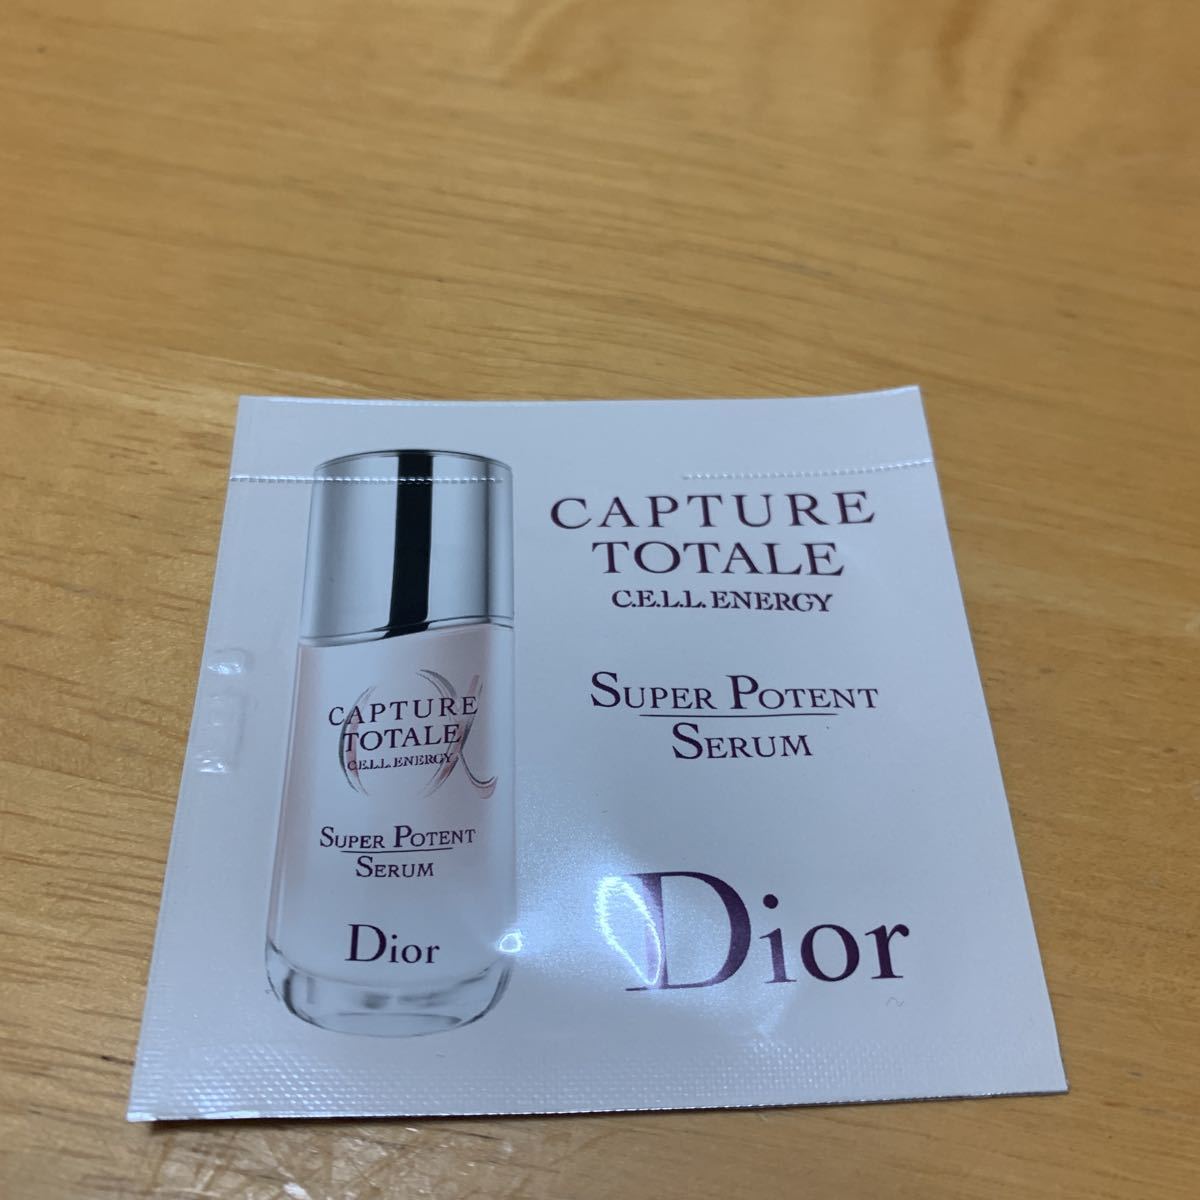 *Christian Diorka small .-ru Total cell *ENGY super Sera m beauty care liquid (1ml)* sample * trial *.. goods * Christian Dior *